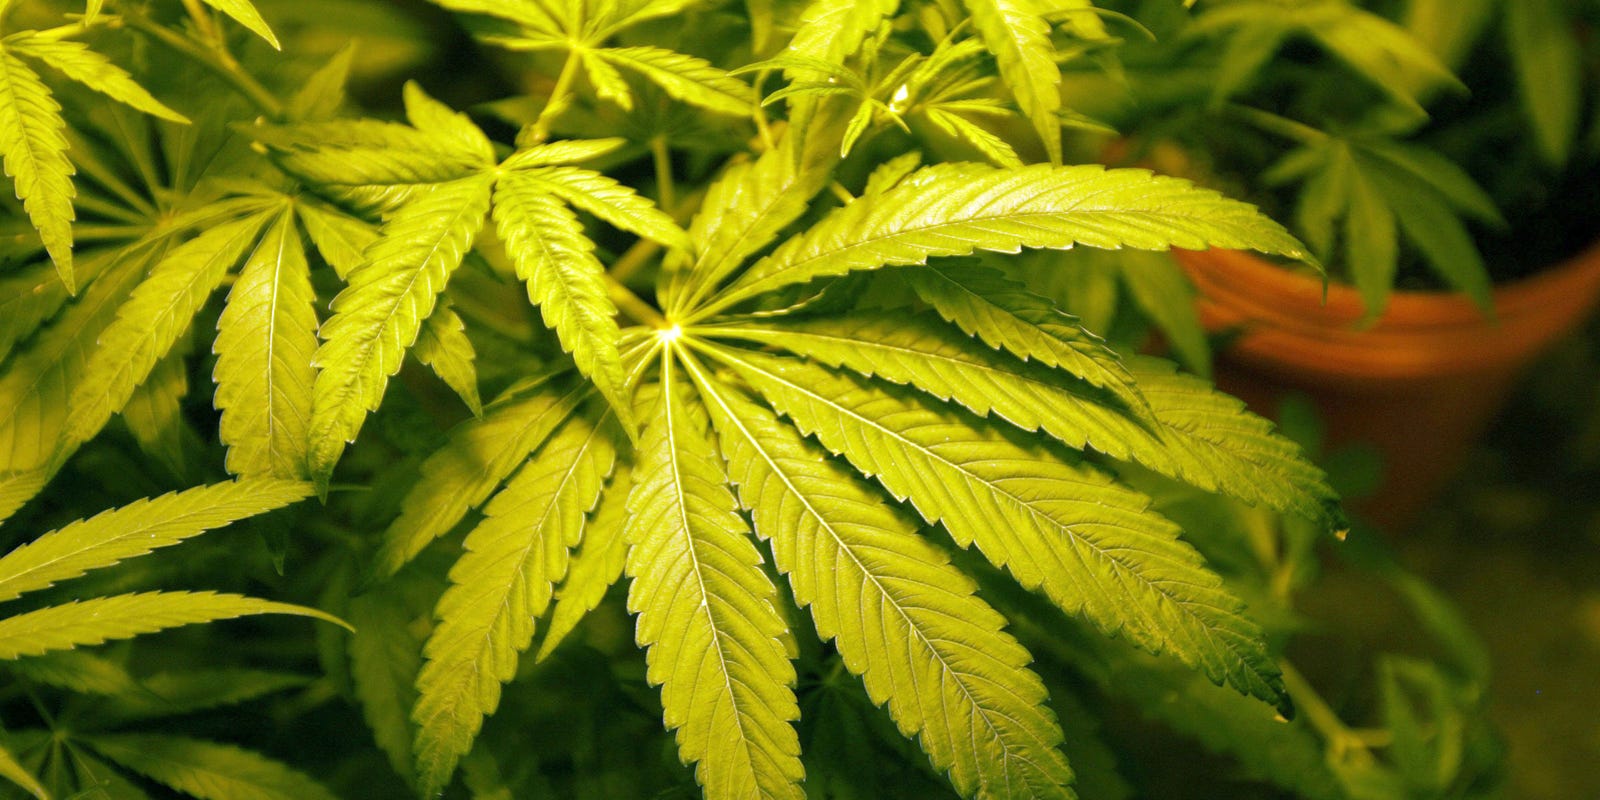 Michigan orders more than 200 medical marijuana businesses to shut down